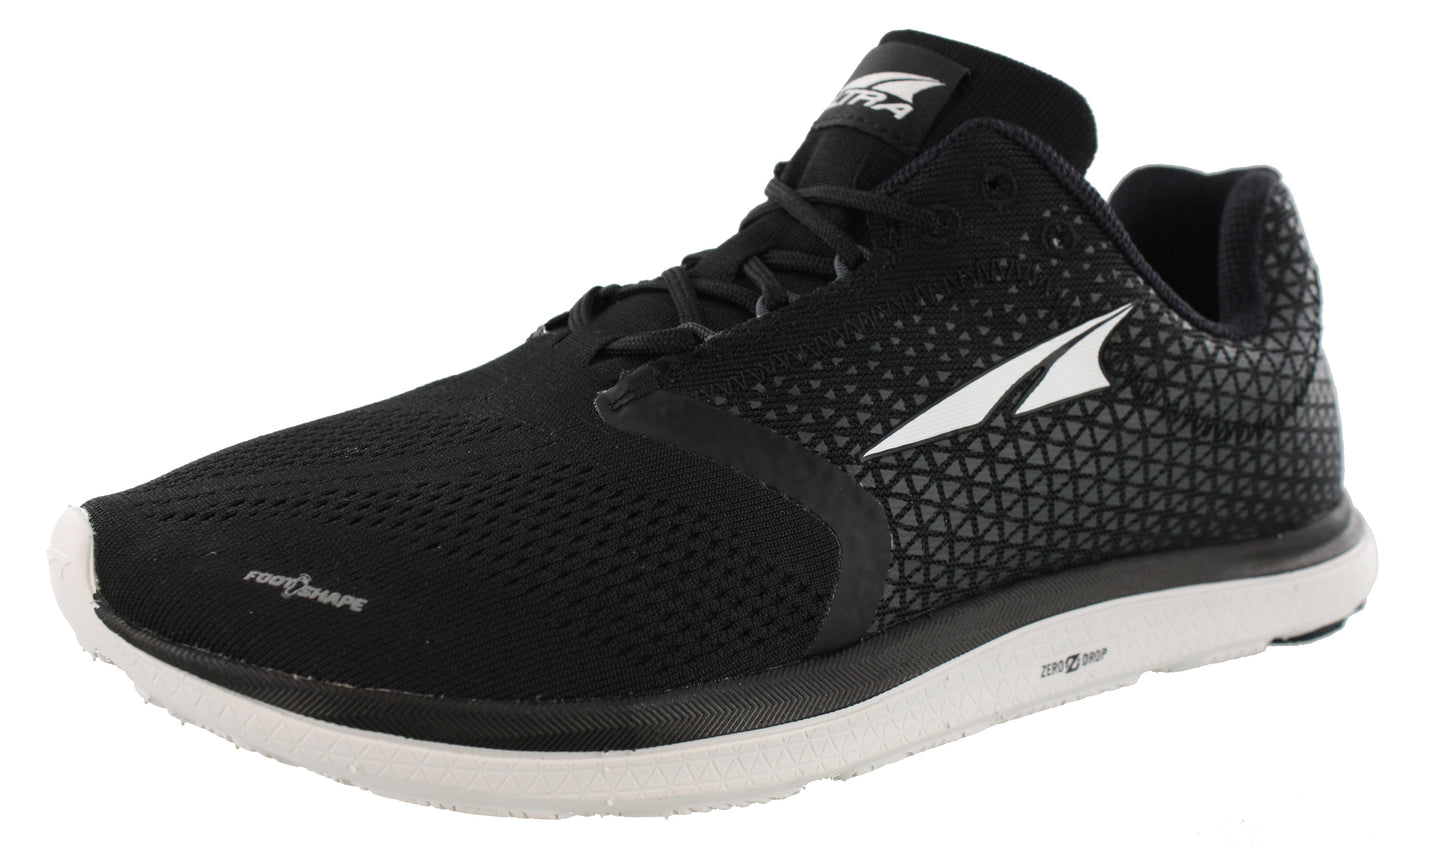 Lasteral of Black Altra Men's Running Lightweight Platform Flexible Shoes Solstice